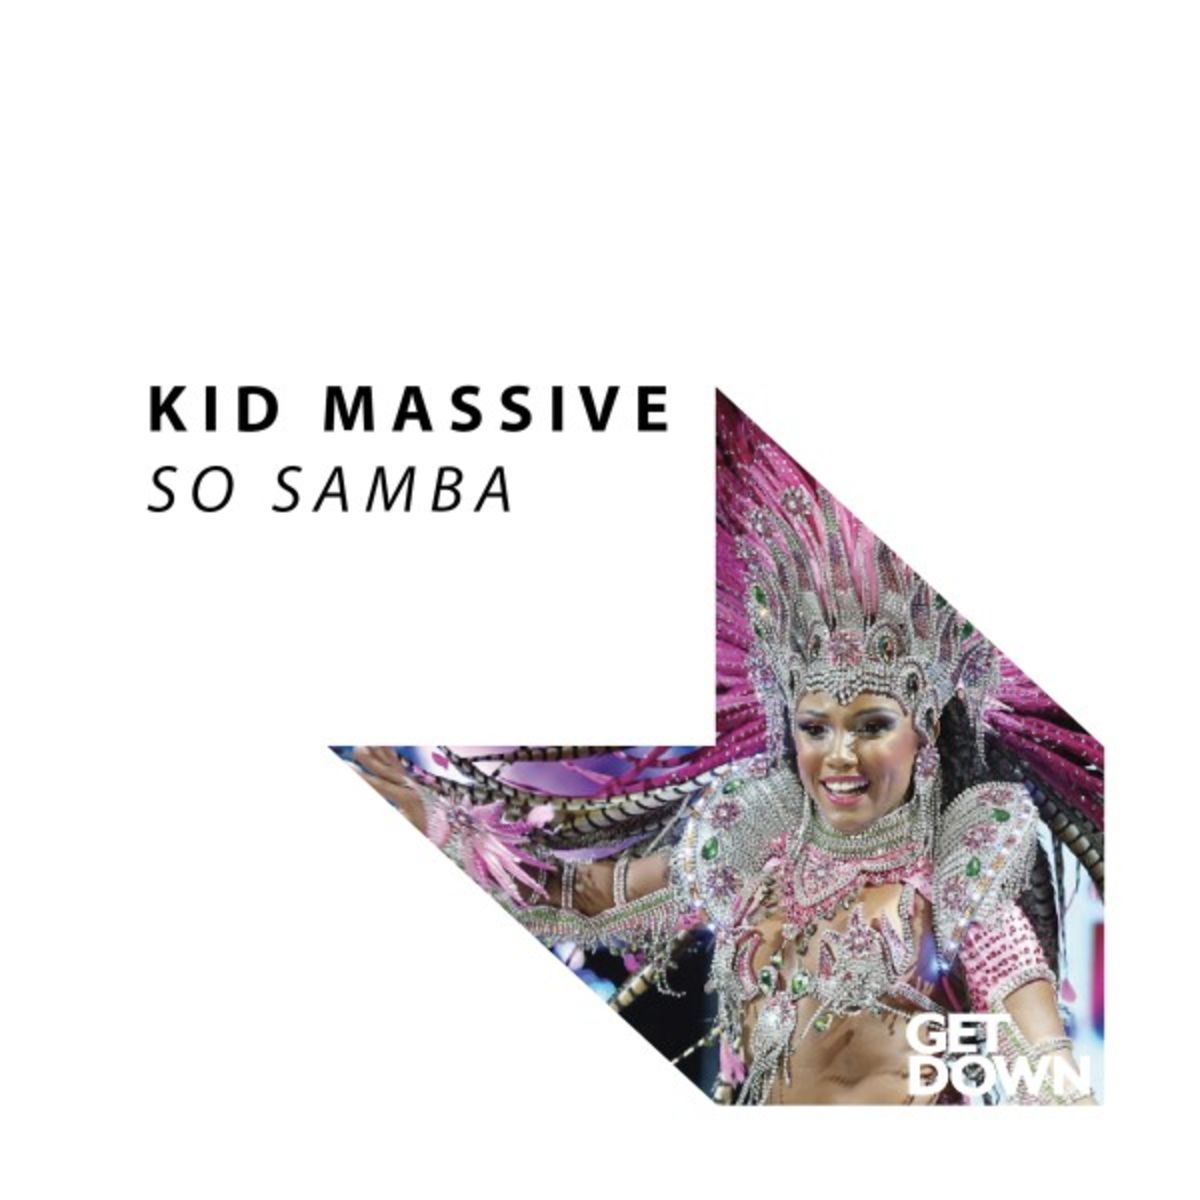 Kid Massive - So Samba / Get Down Recordings